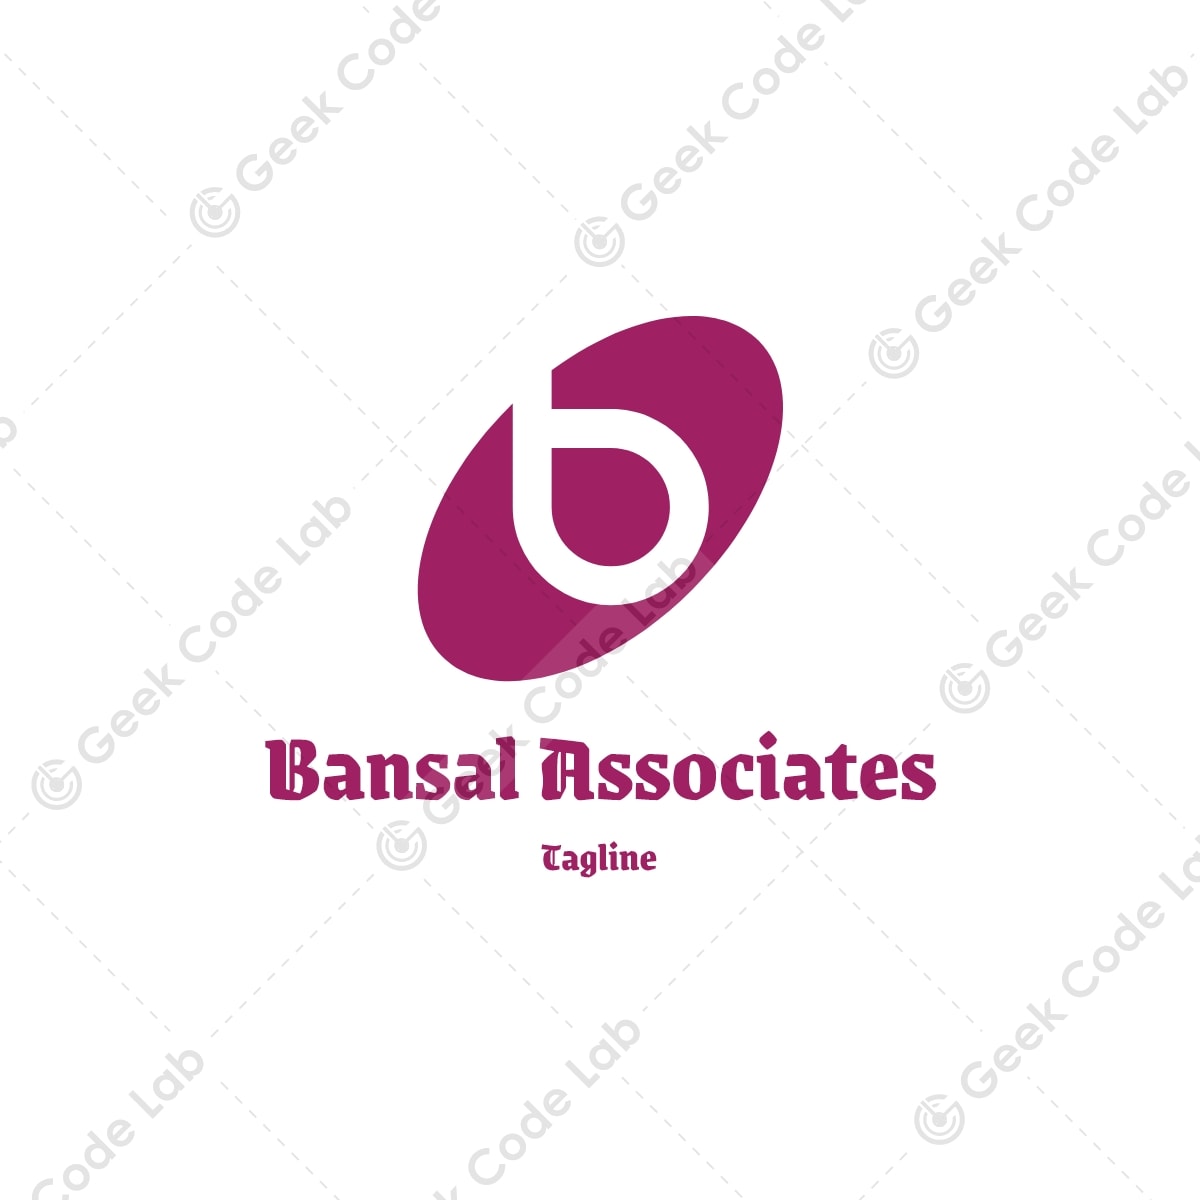 Bansal Associates